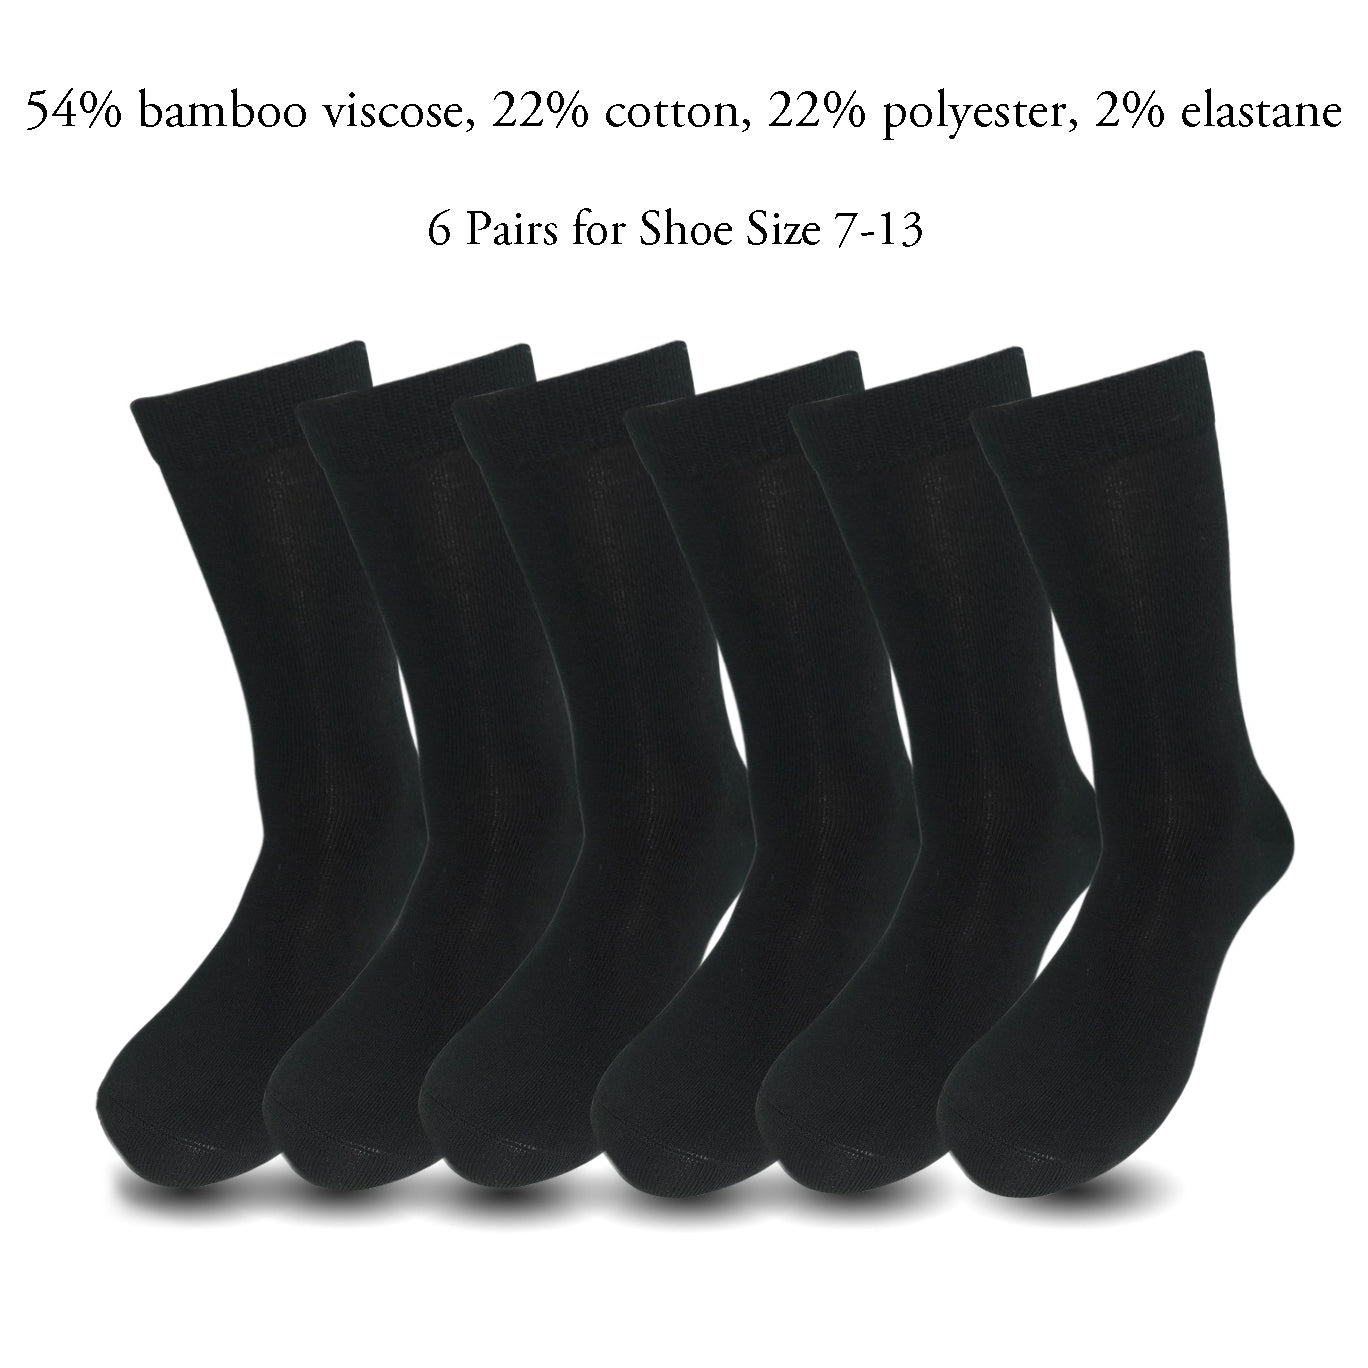 Lavencious Premium Men's Soft and Comfort Bamboo Fiber Crew Dress Socks for Men Shoe Size 7-13, 6 Pairs (Black)